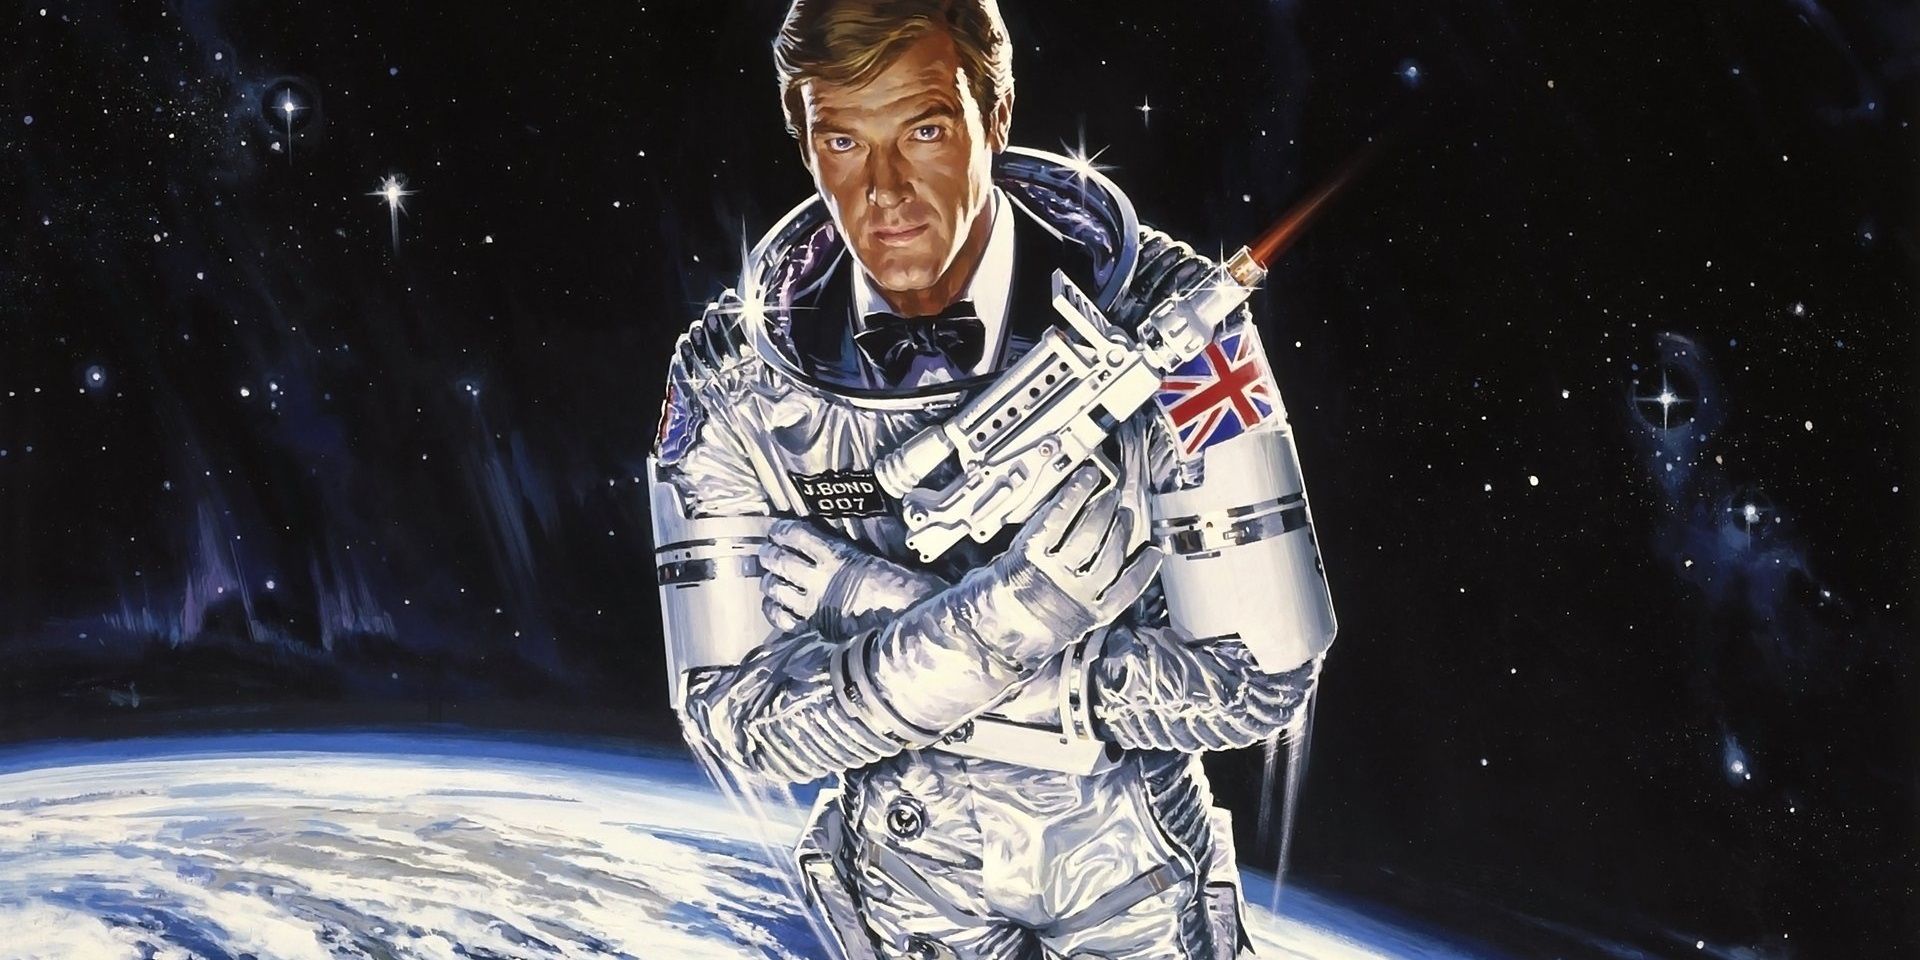 Roger Moore on the poster for Moonraker